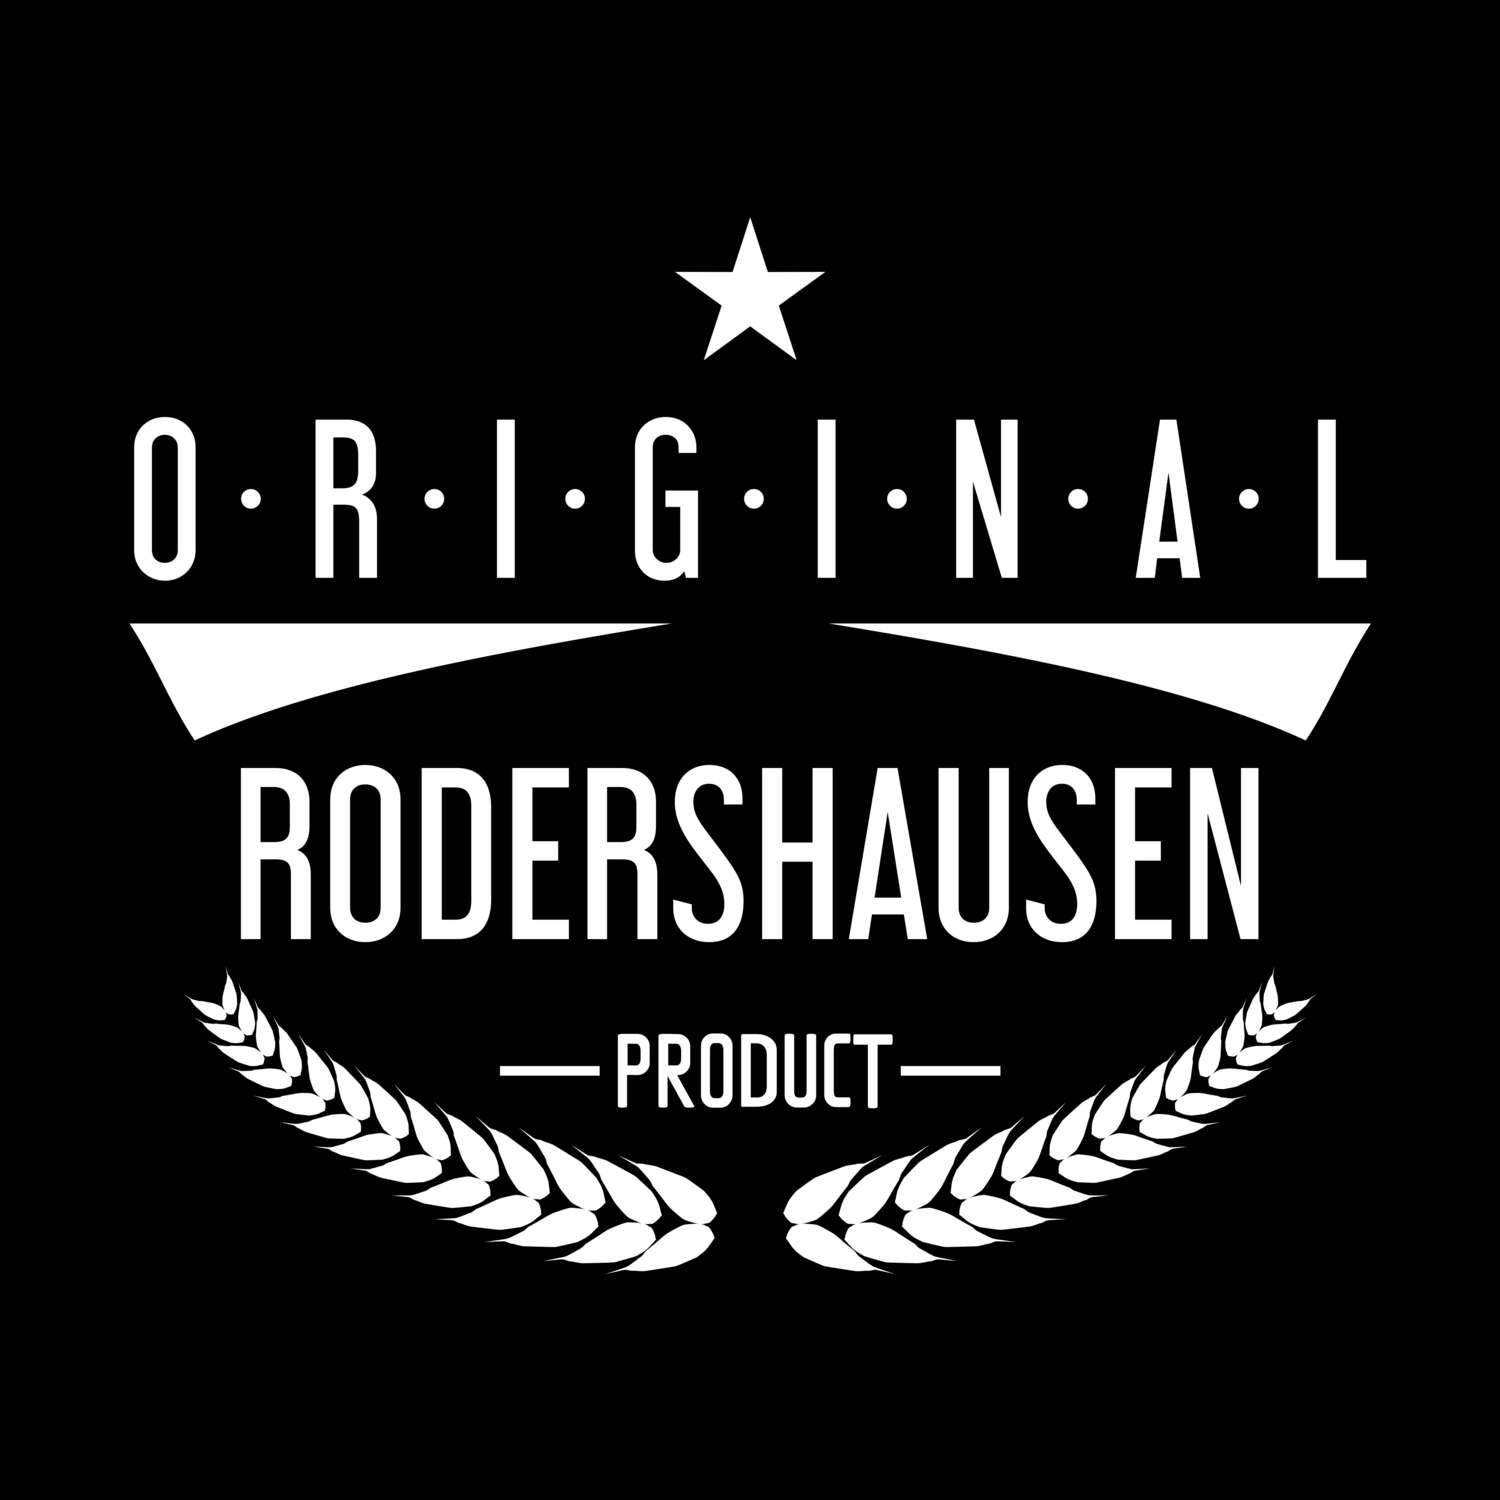 Rodershausen T-Shirt »Original Product«